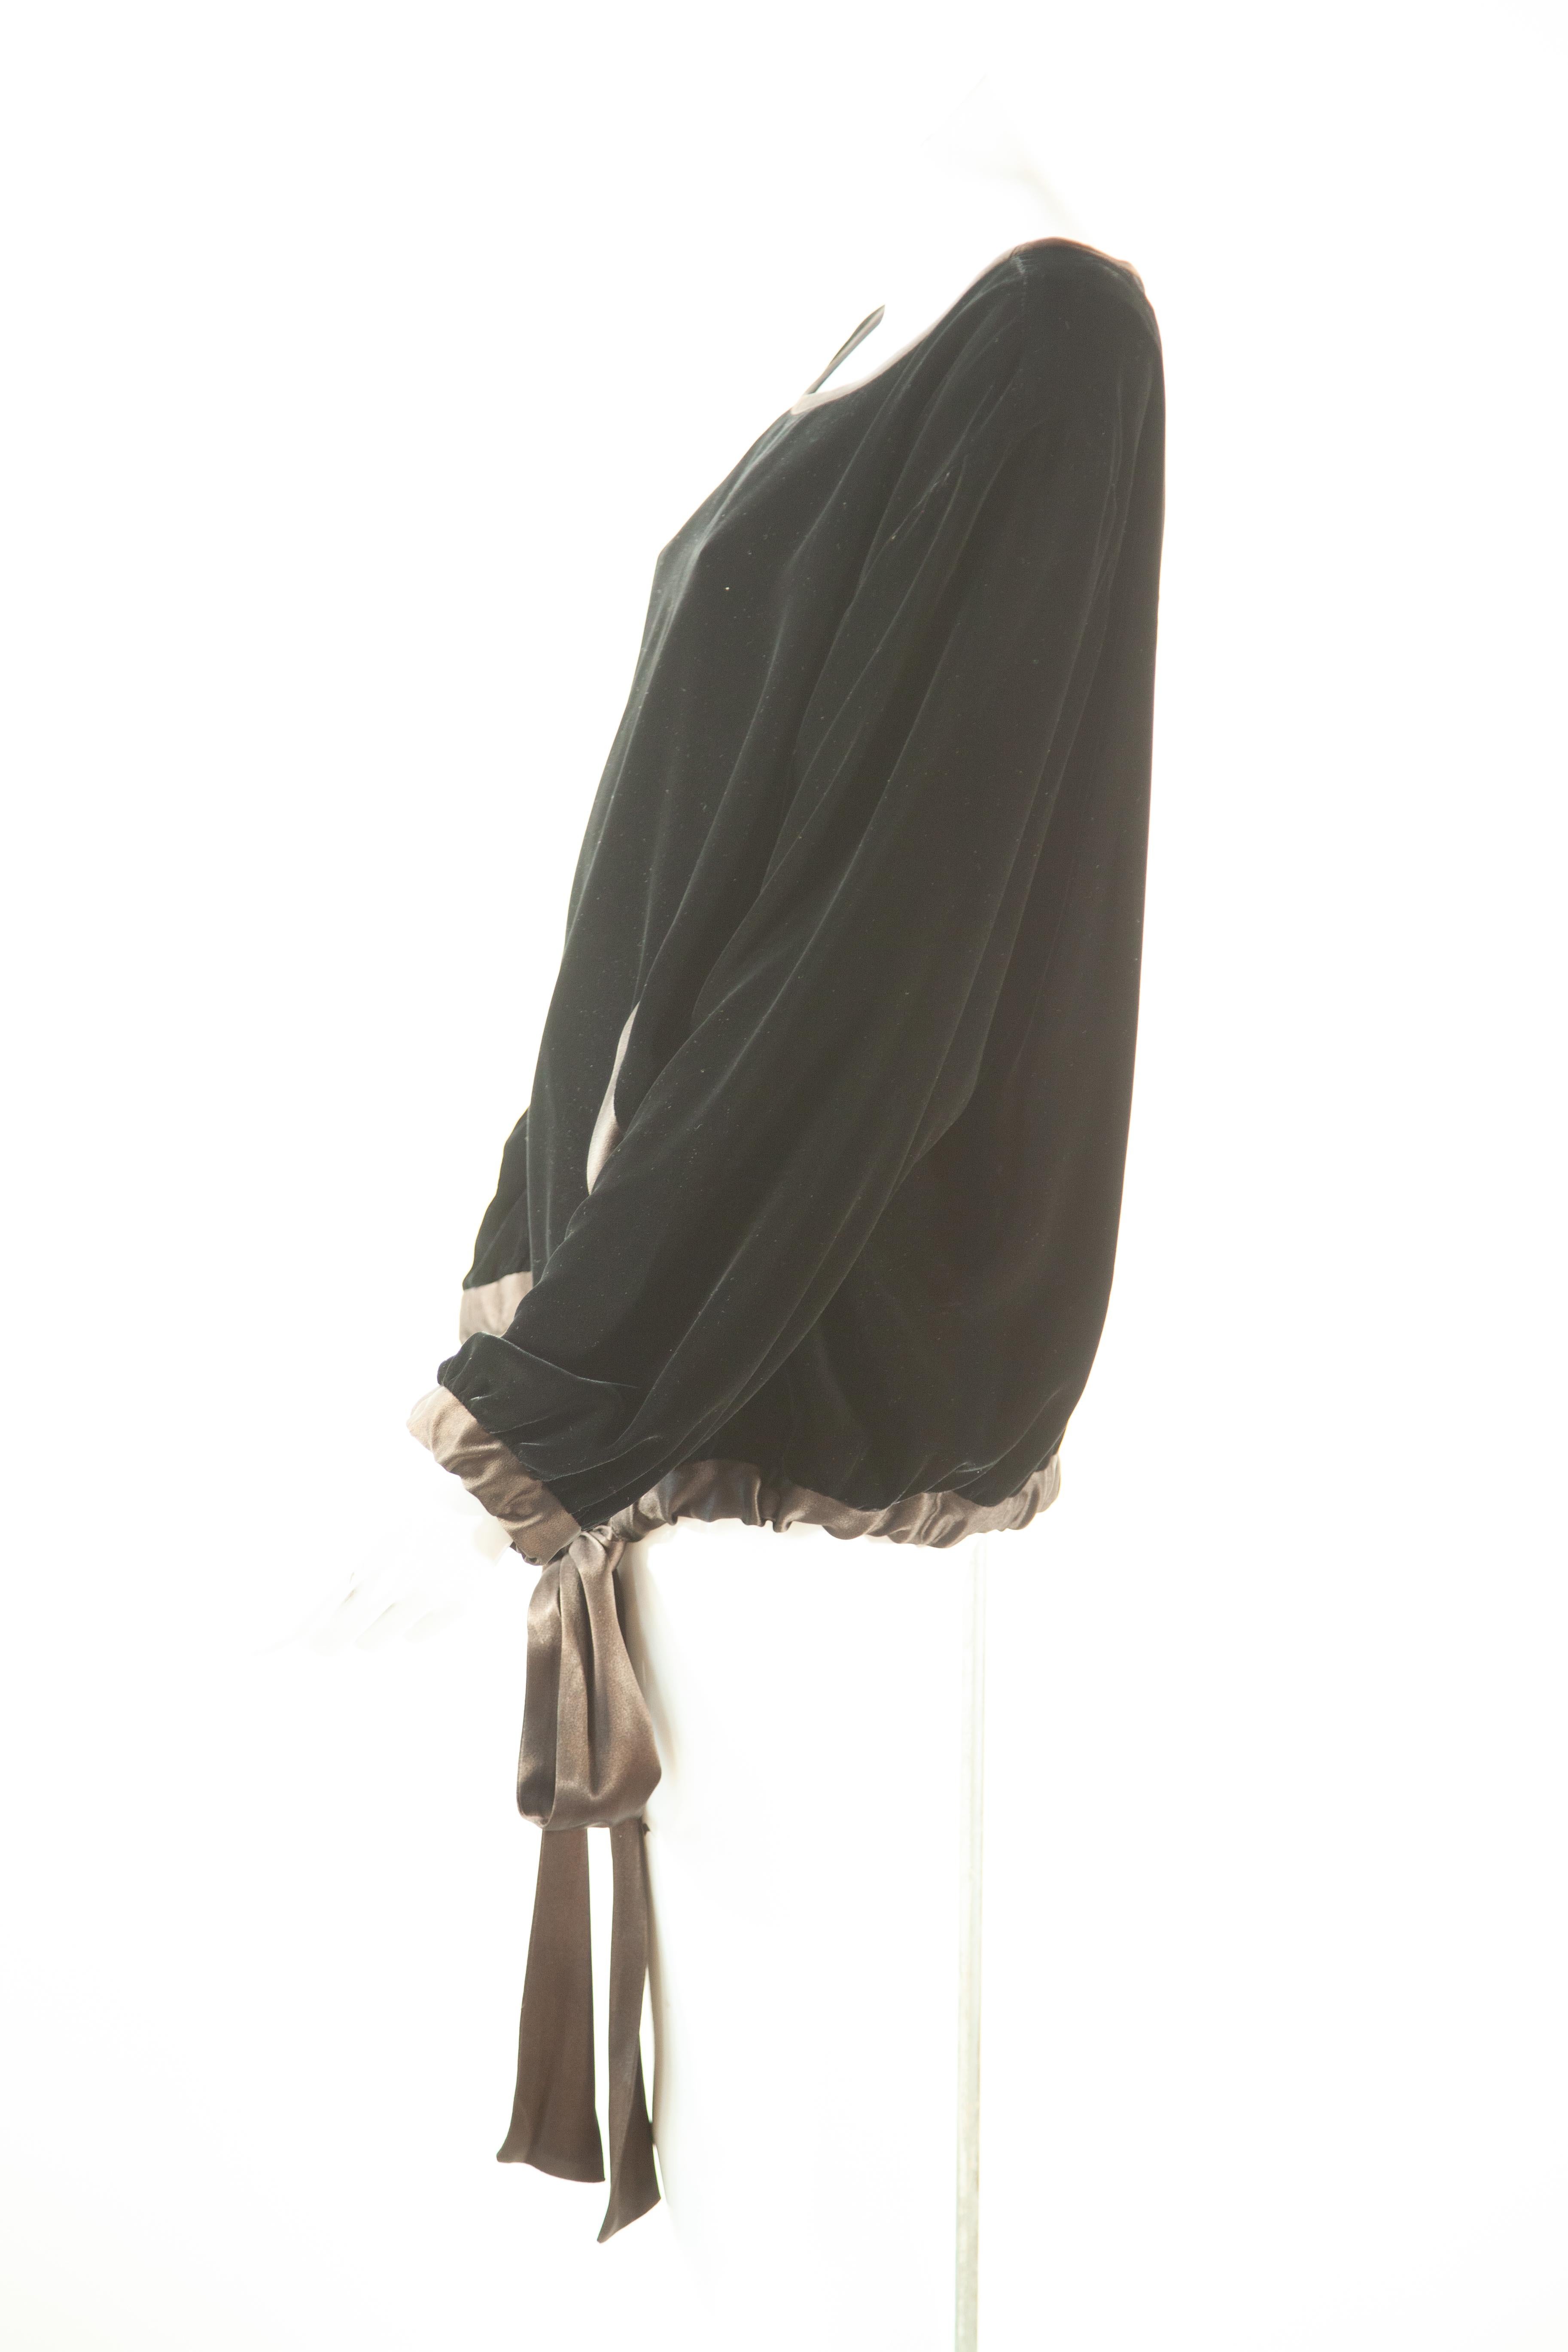 Yves Saint Laurent, black velvet top with side pockets and satin trim, satin tie waist

Sz 40